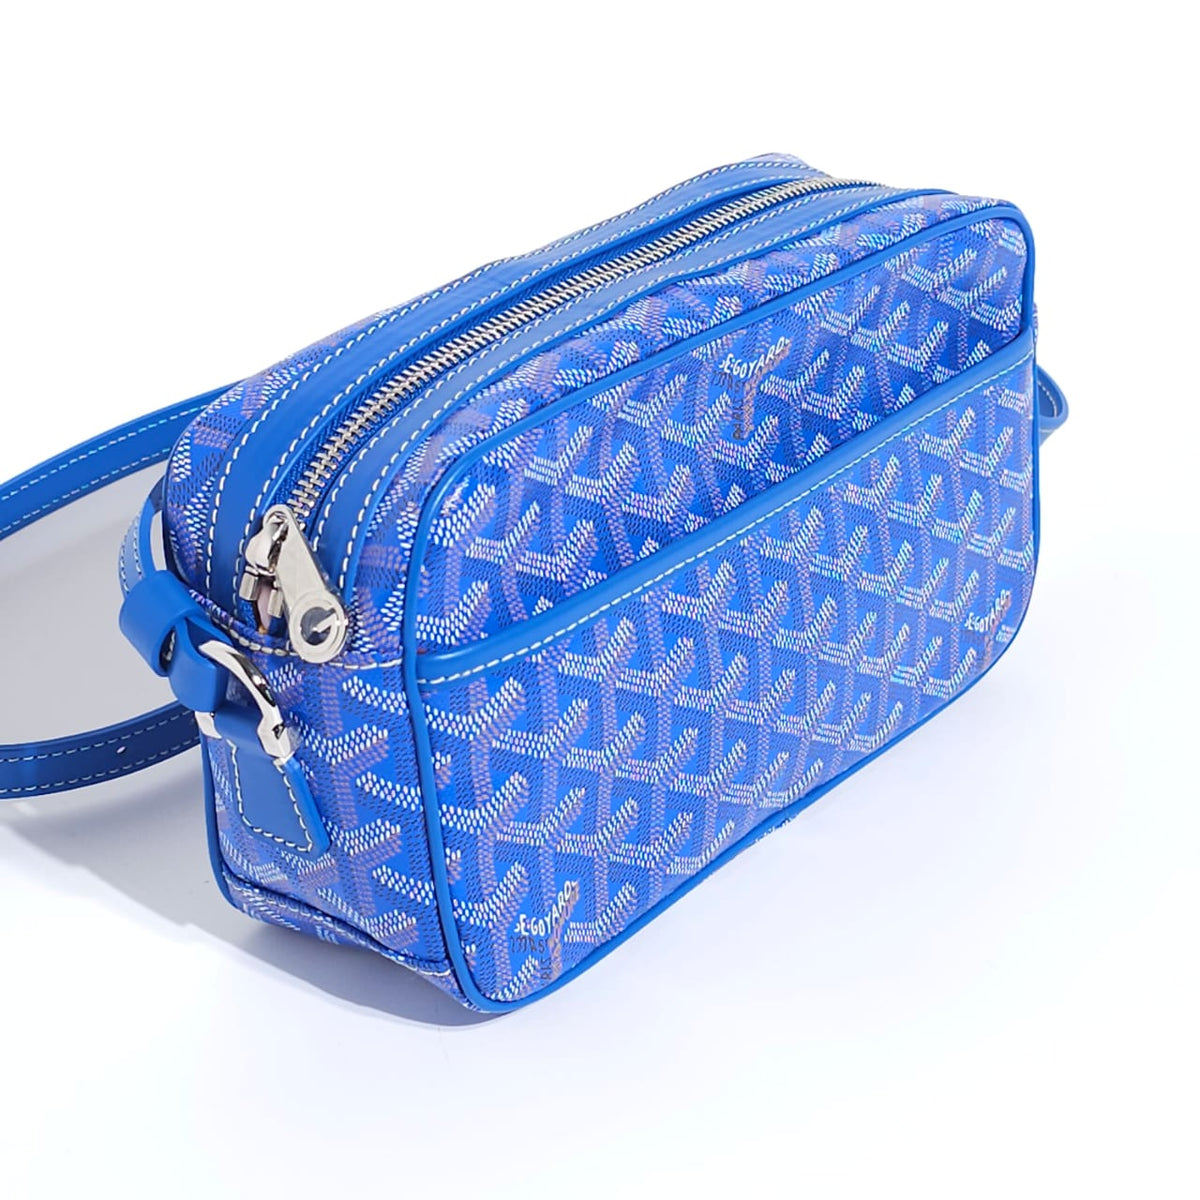 Goyard Goyardine Sac Rouette PM - Blue Shoulder Bags, Handbags